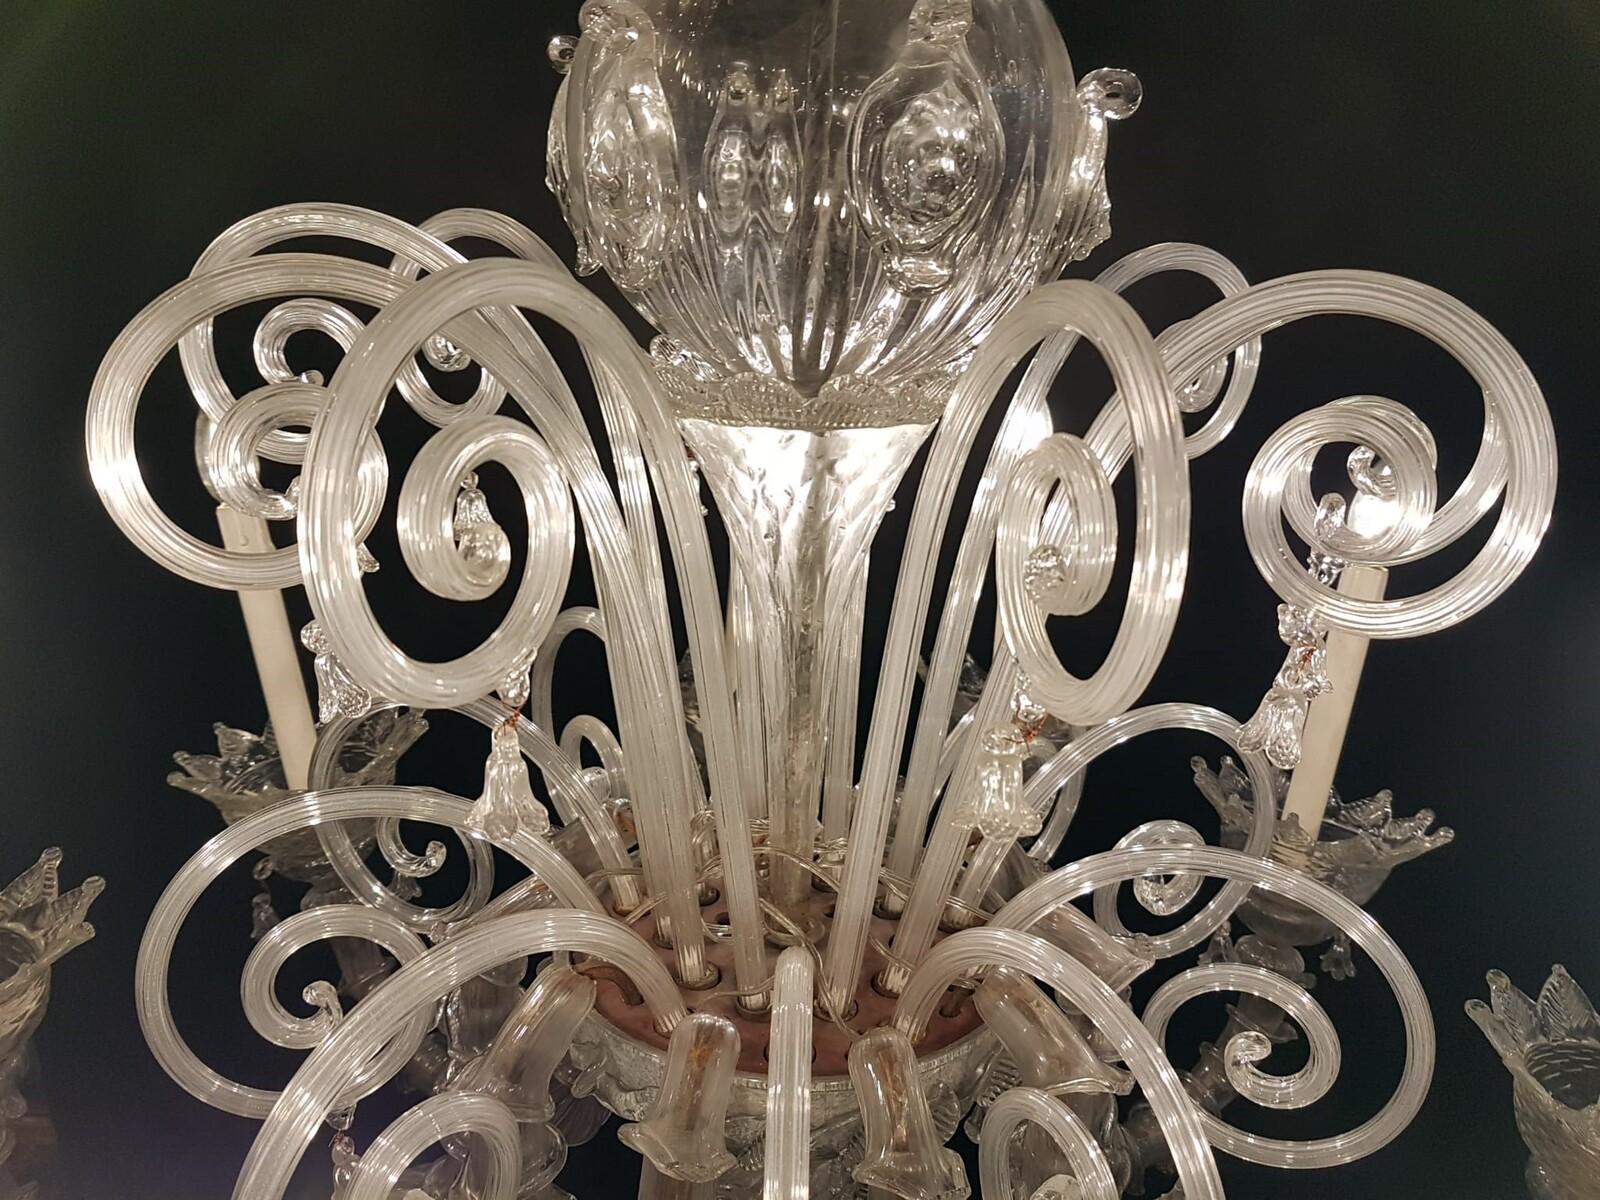 Late 20th Century Murano Glass Rezzonico Chandelier - 10 Sconces For Sale